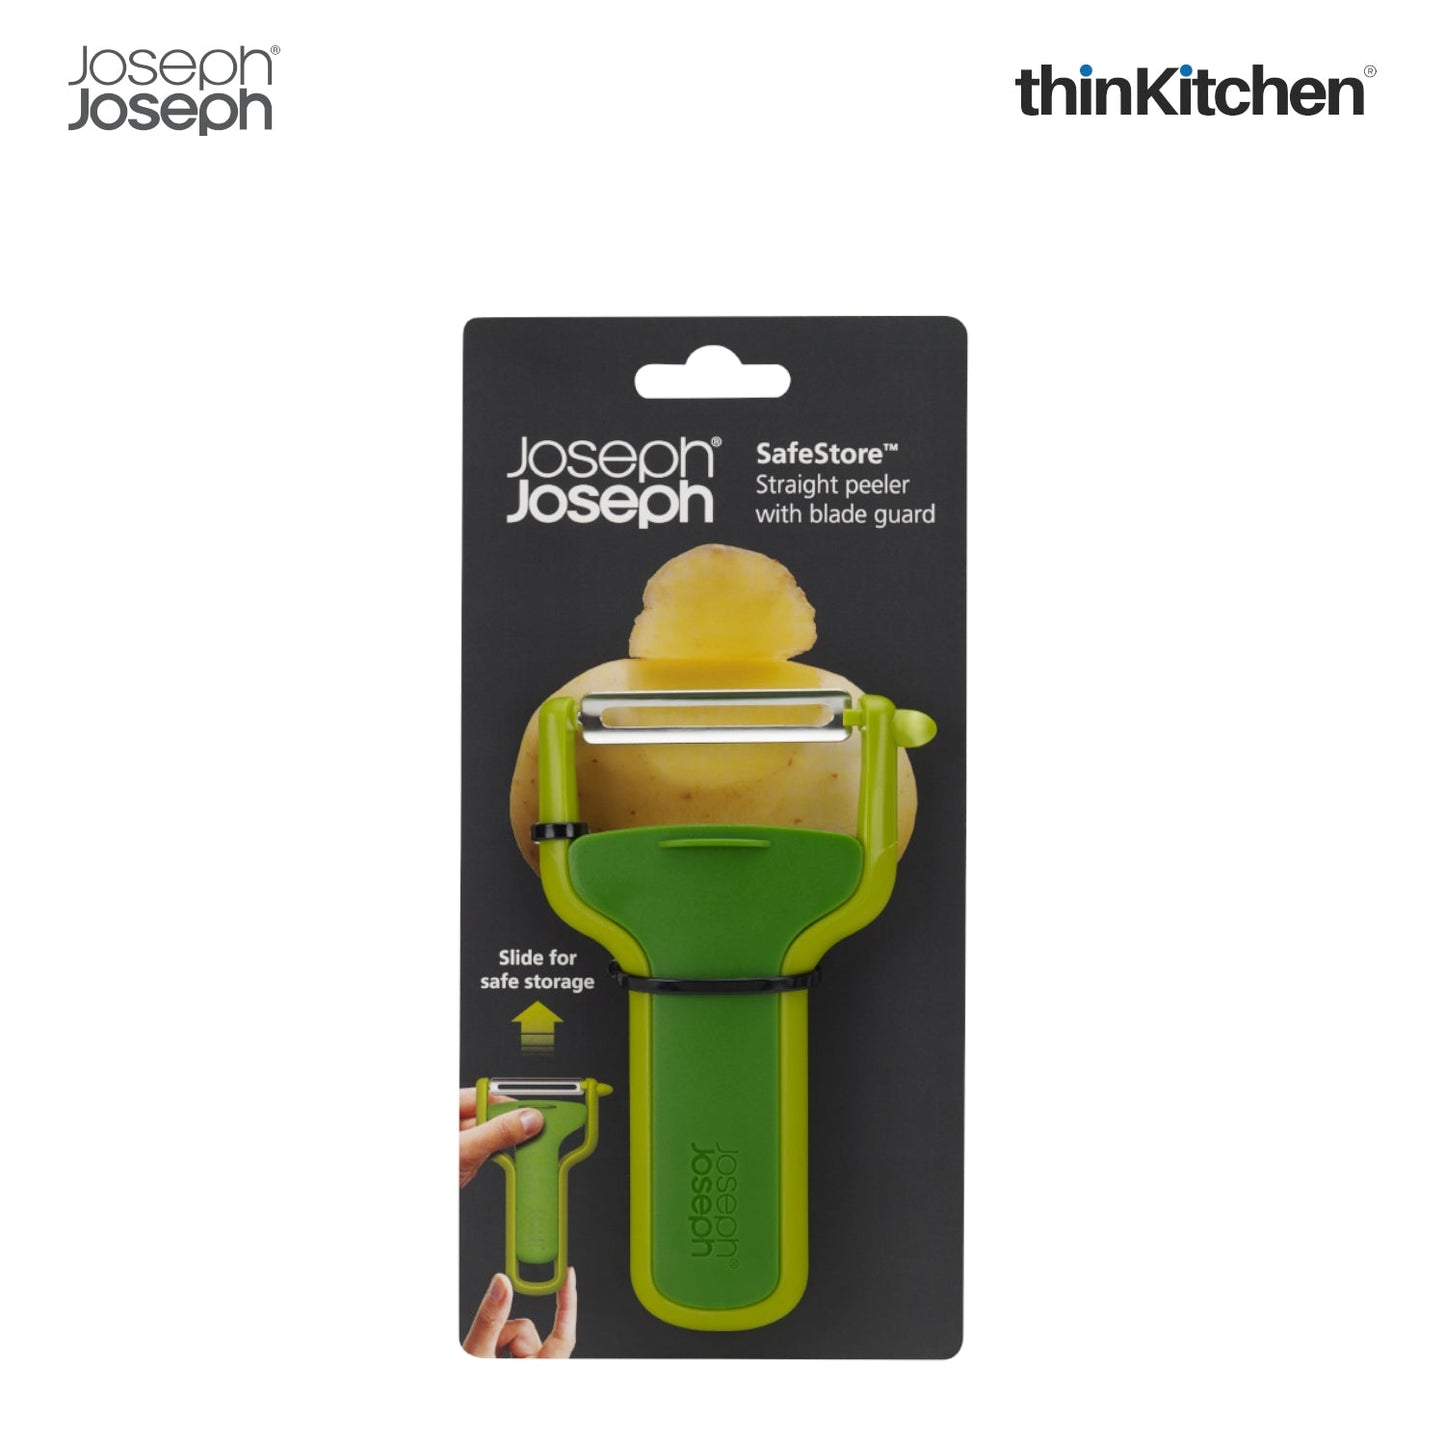 thinKitchen™ Joseph Joseph SafeStore Straight Peeler with Blade Guard - Green